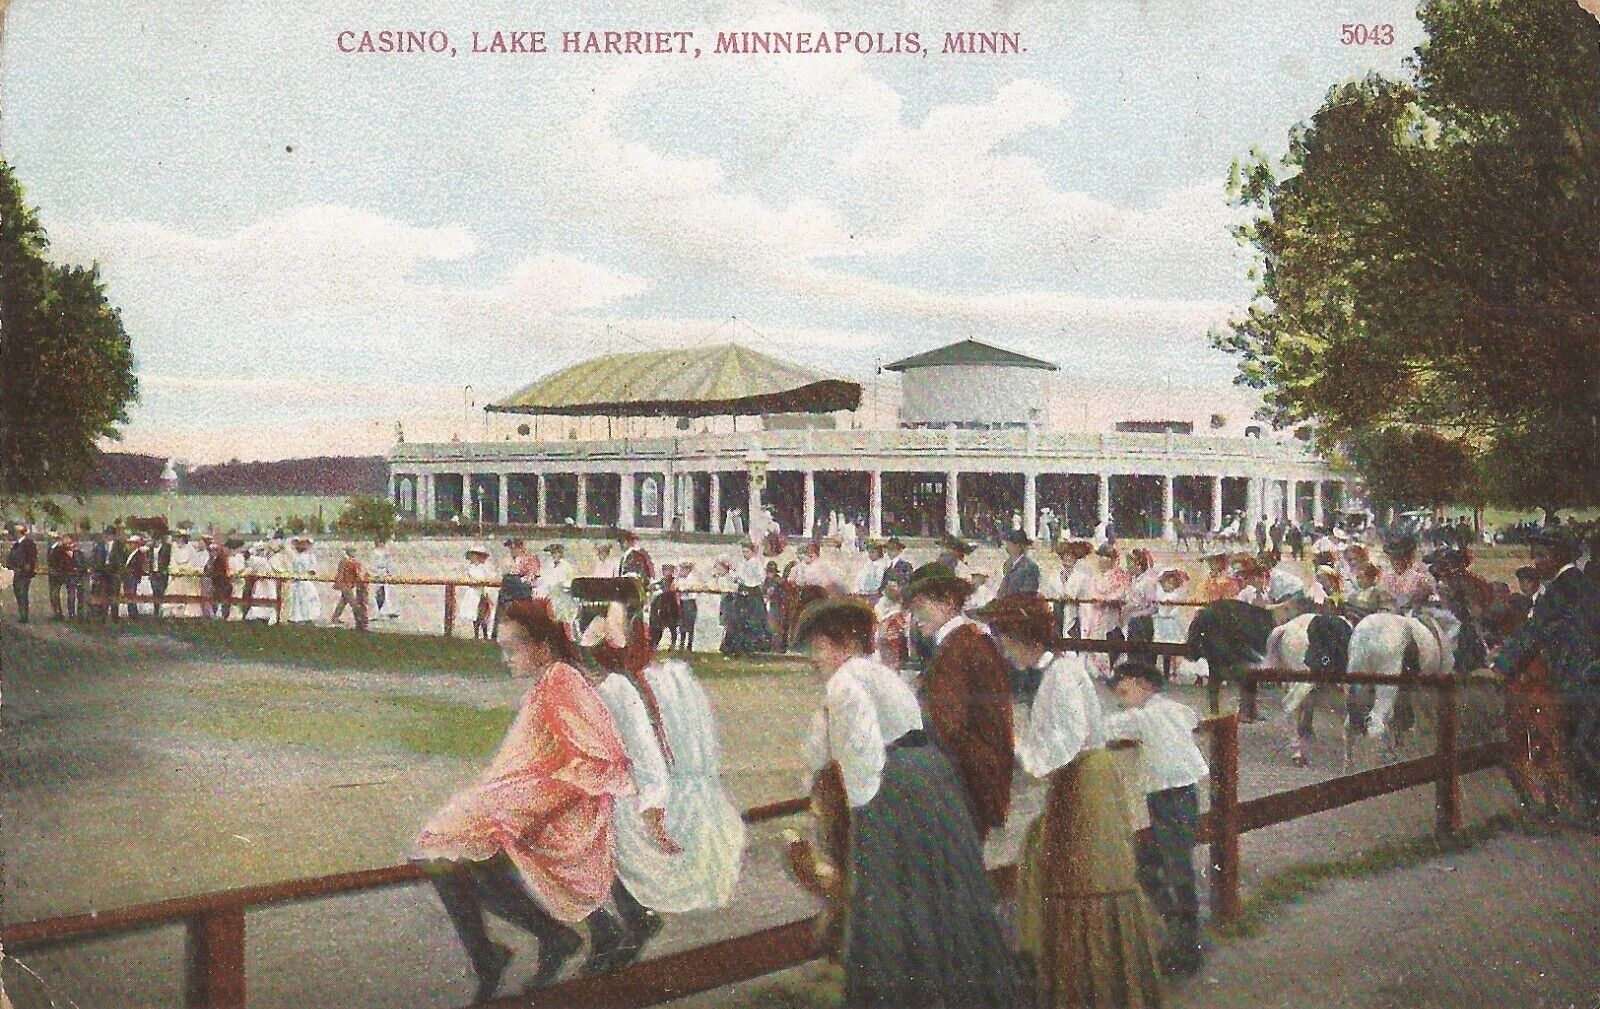 Minneapolis, MINNESOTA - Lake Harriet - Casino - long dresses, suits & hats